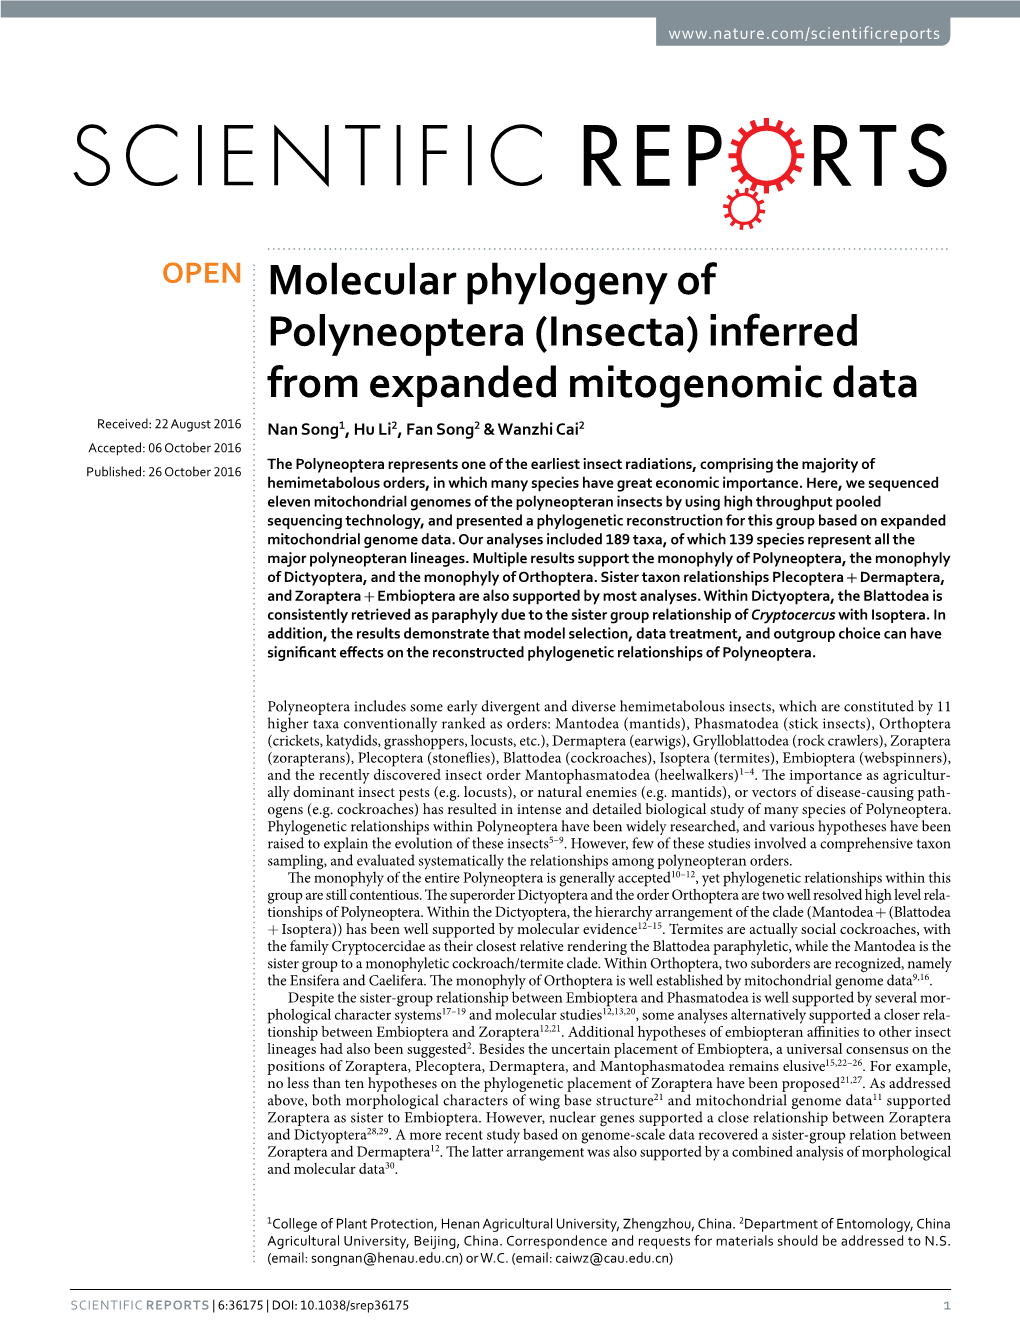 Molecular Phylogeny of Polyneoptera